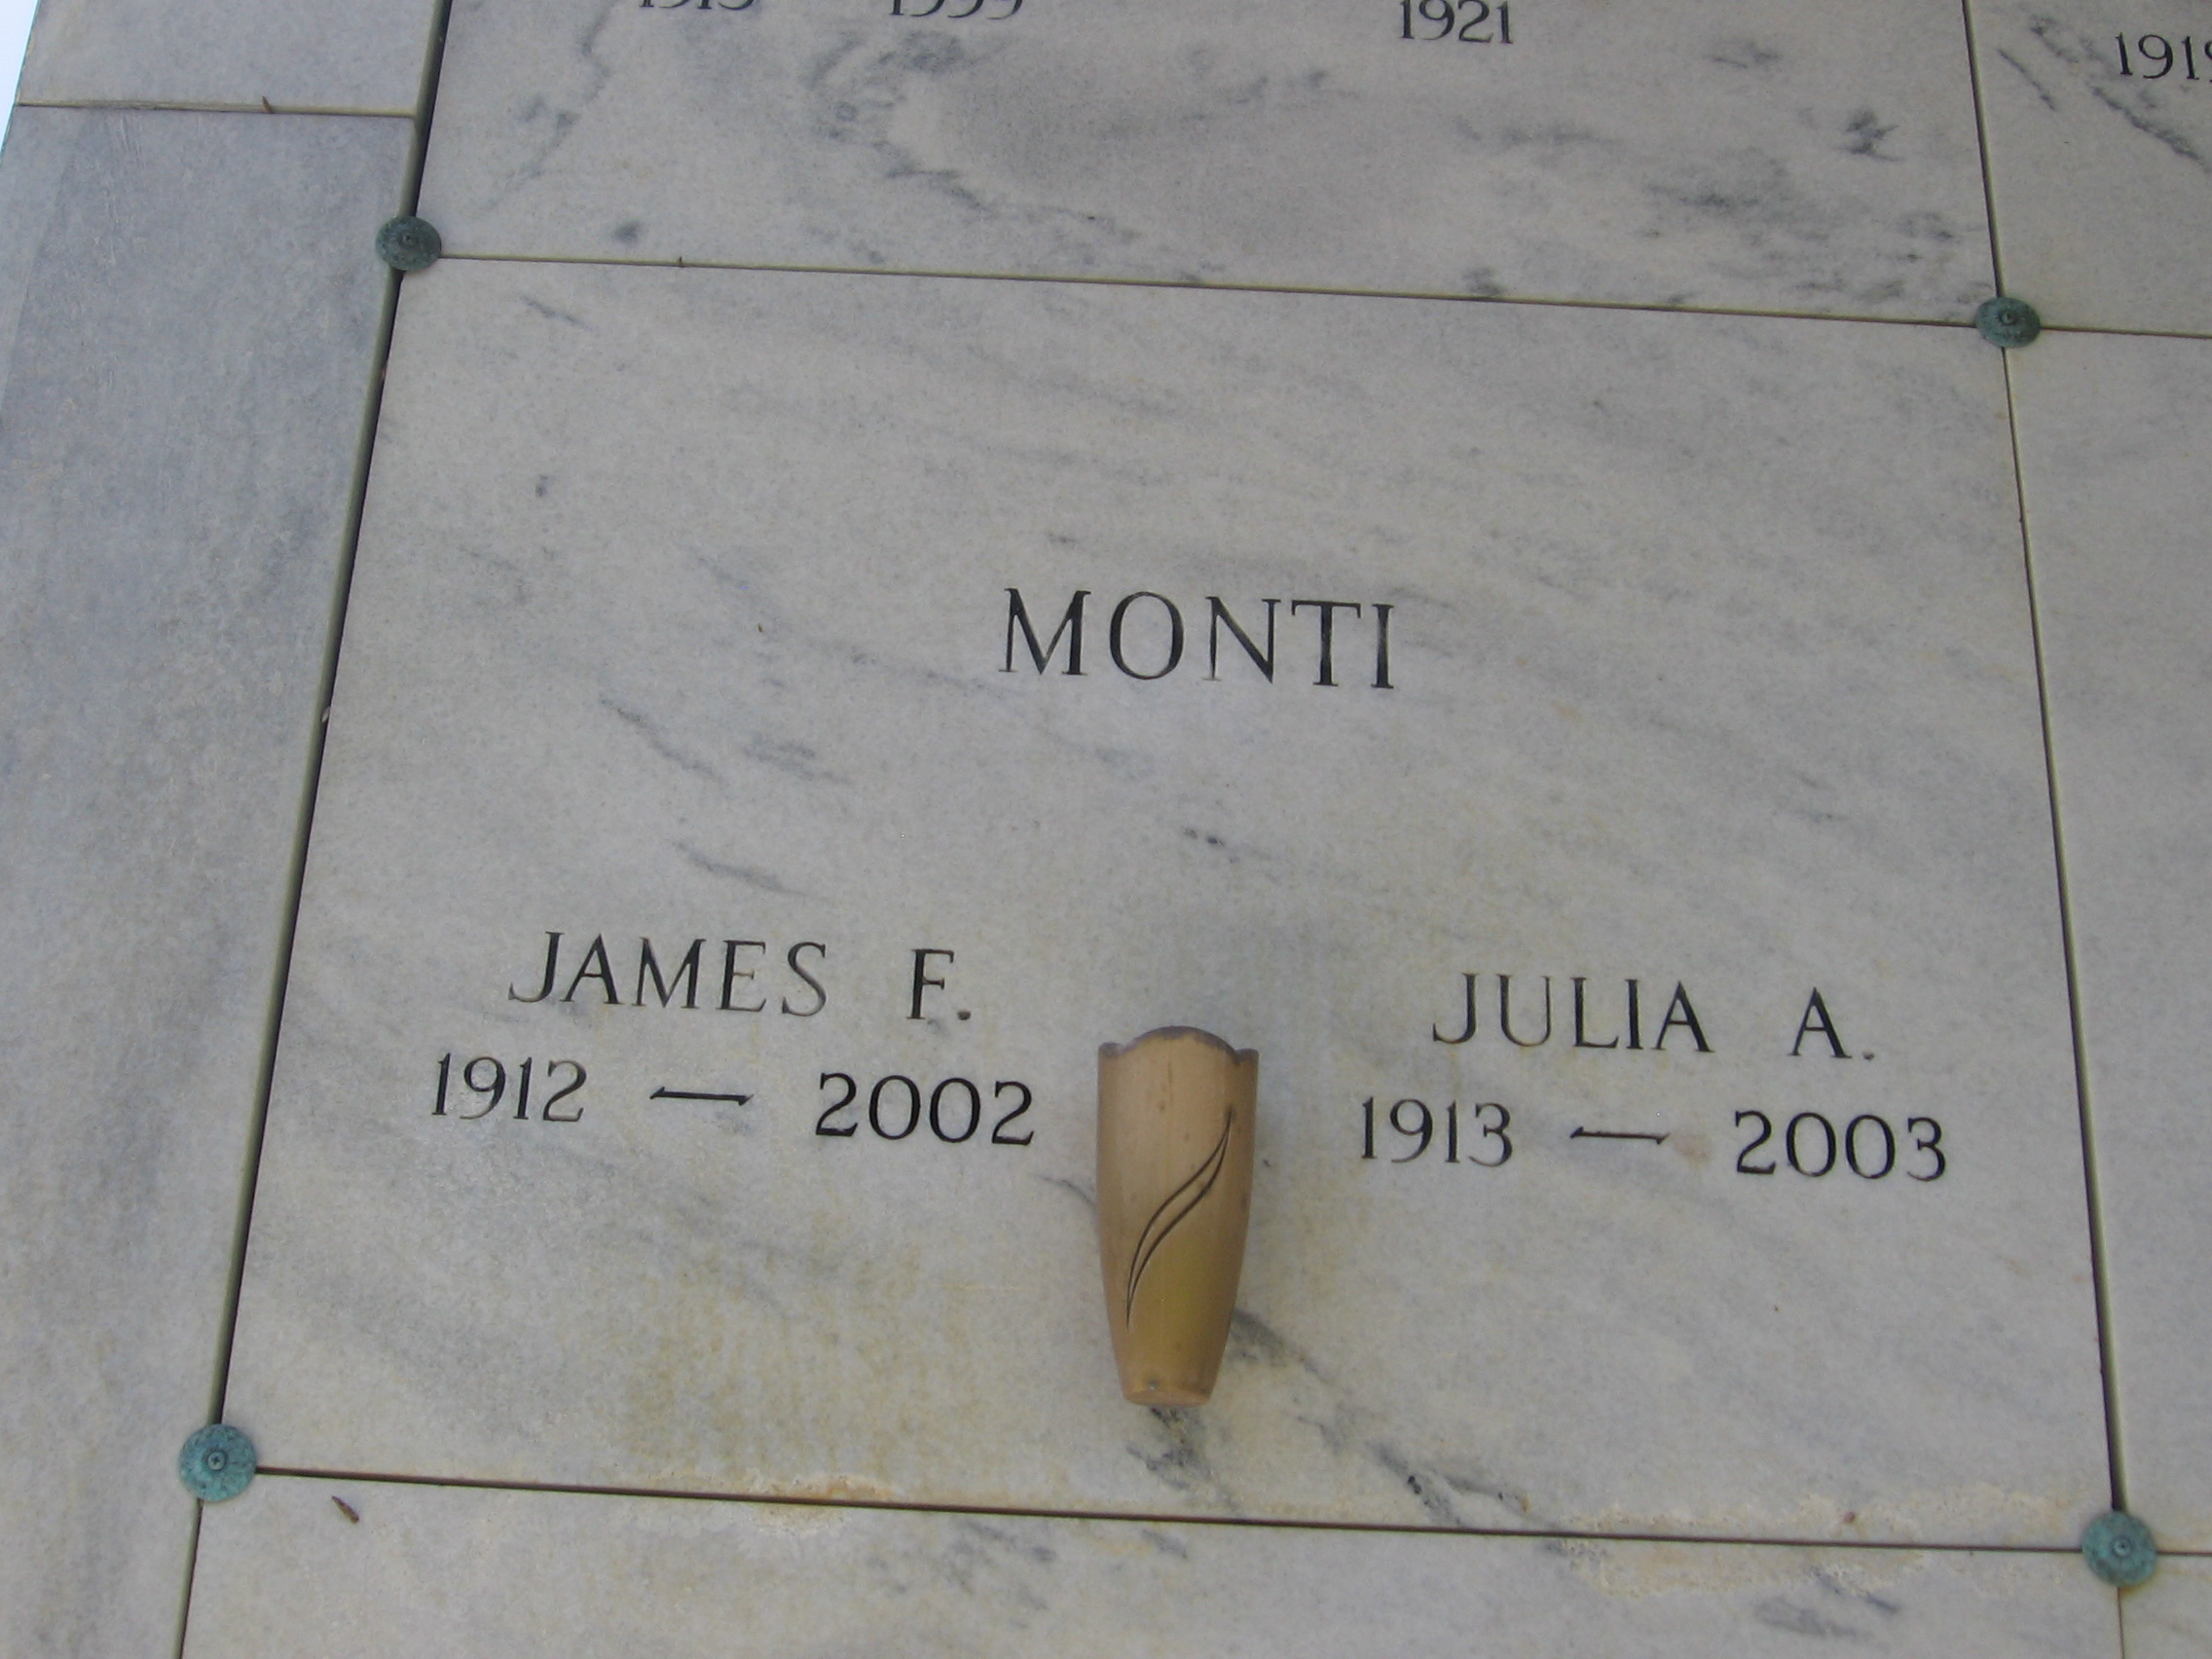 James F Monti